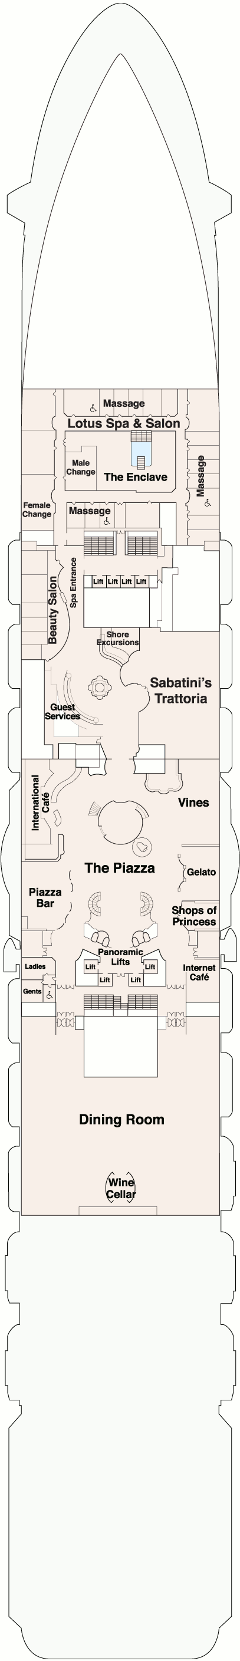 Sky Princess Plaza Deck Deck Plan